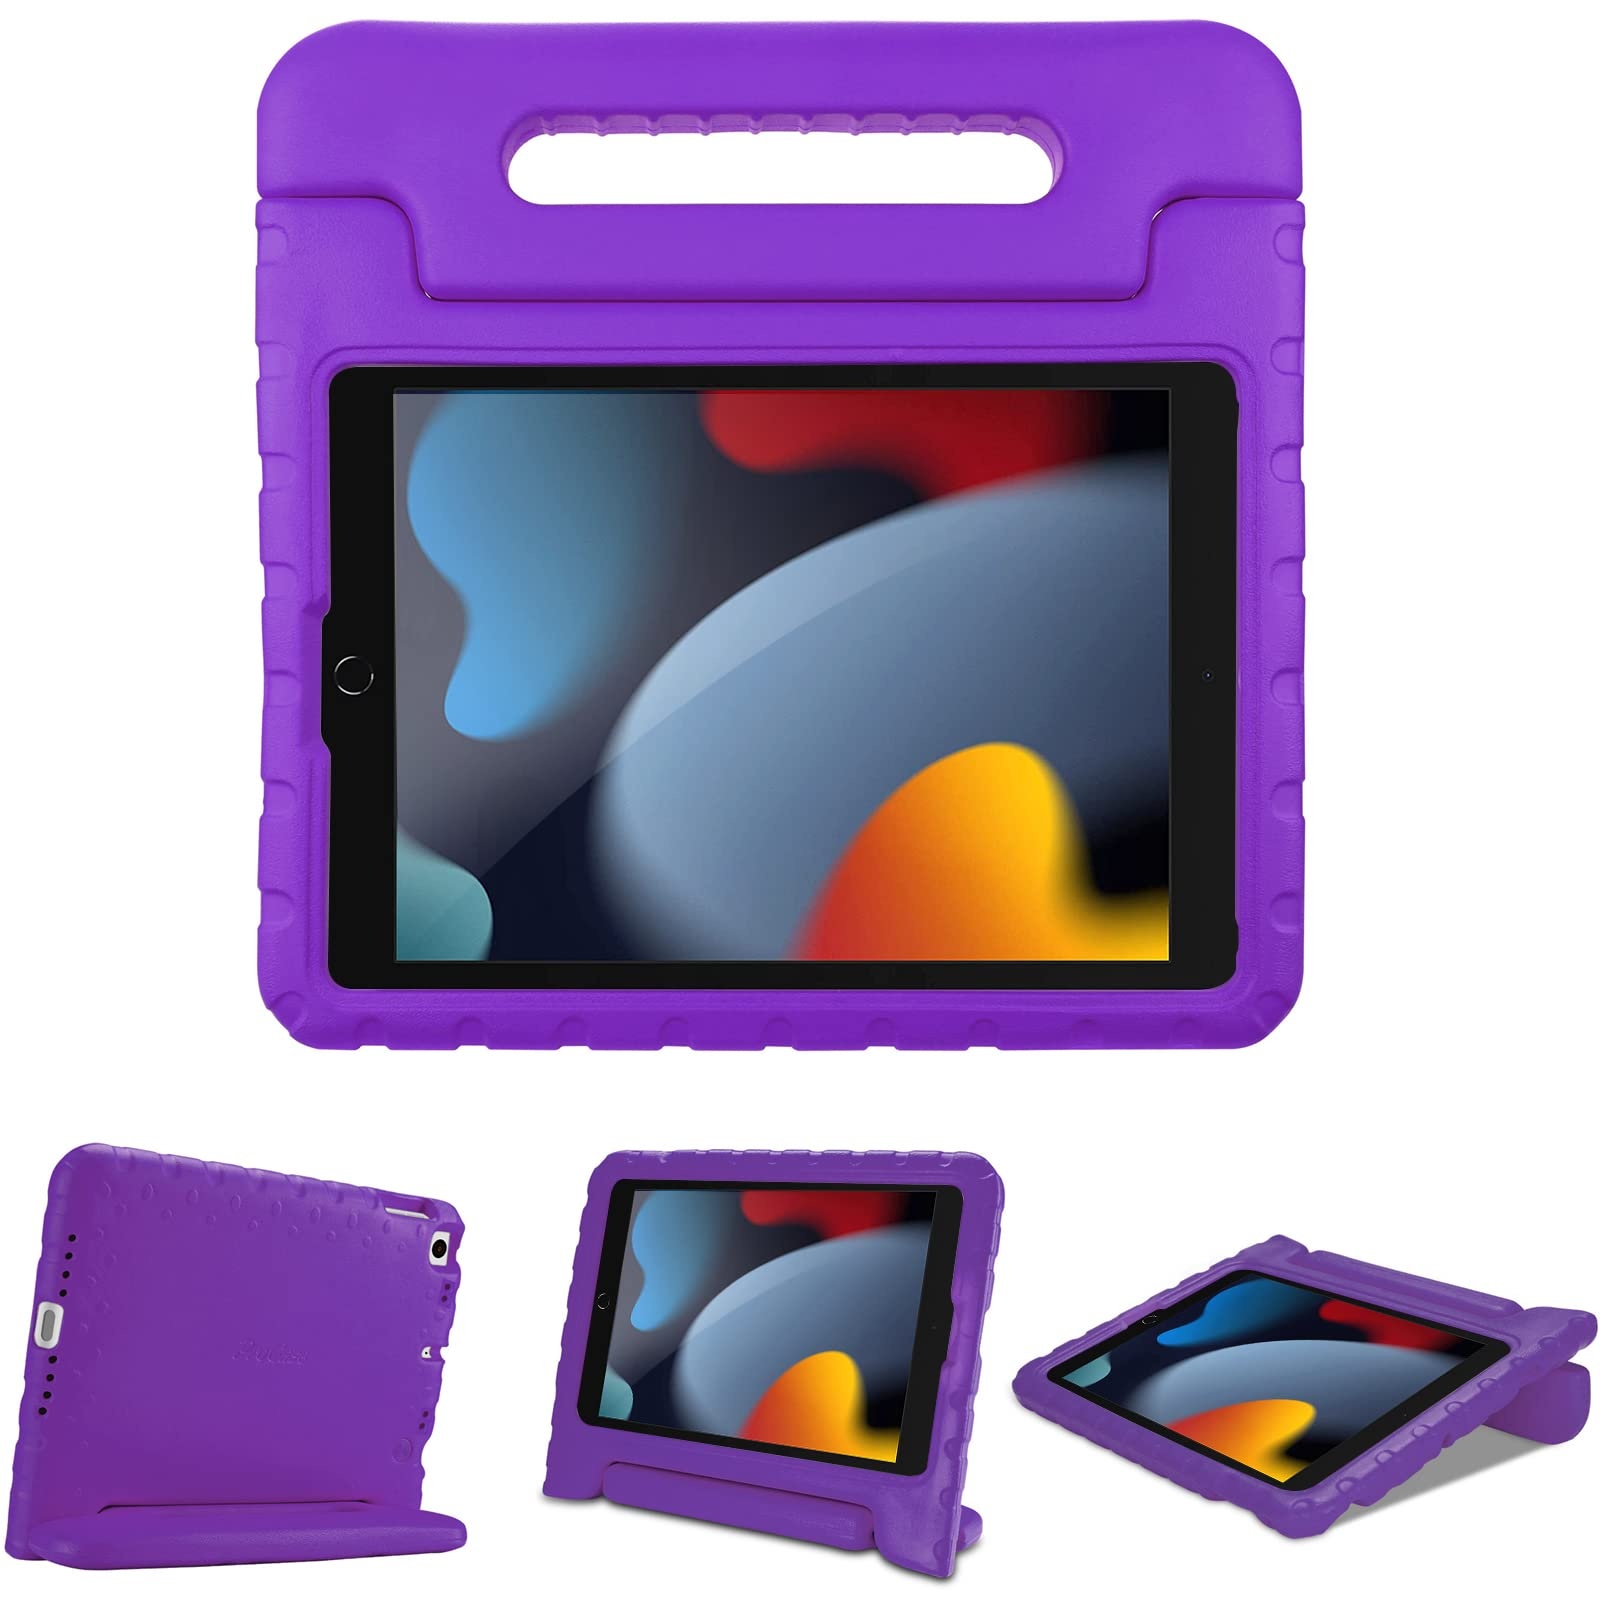 ProCase Kinder Hülle mit Kickstand für iPad 10.2 Zoll/iPad Pro 10.5 Zoll/iPad Air 3rd 10.5 Zoll, Ultra Leicht Stoßfest Robust Kind Schutzhülle Umwandelbar Handgriff Handle Standfunktion -Lila